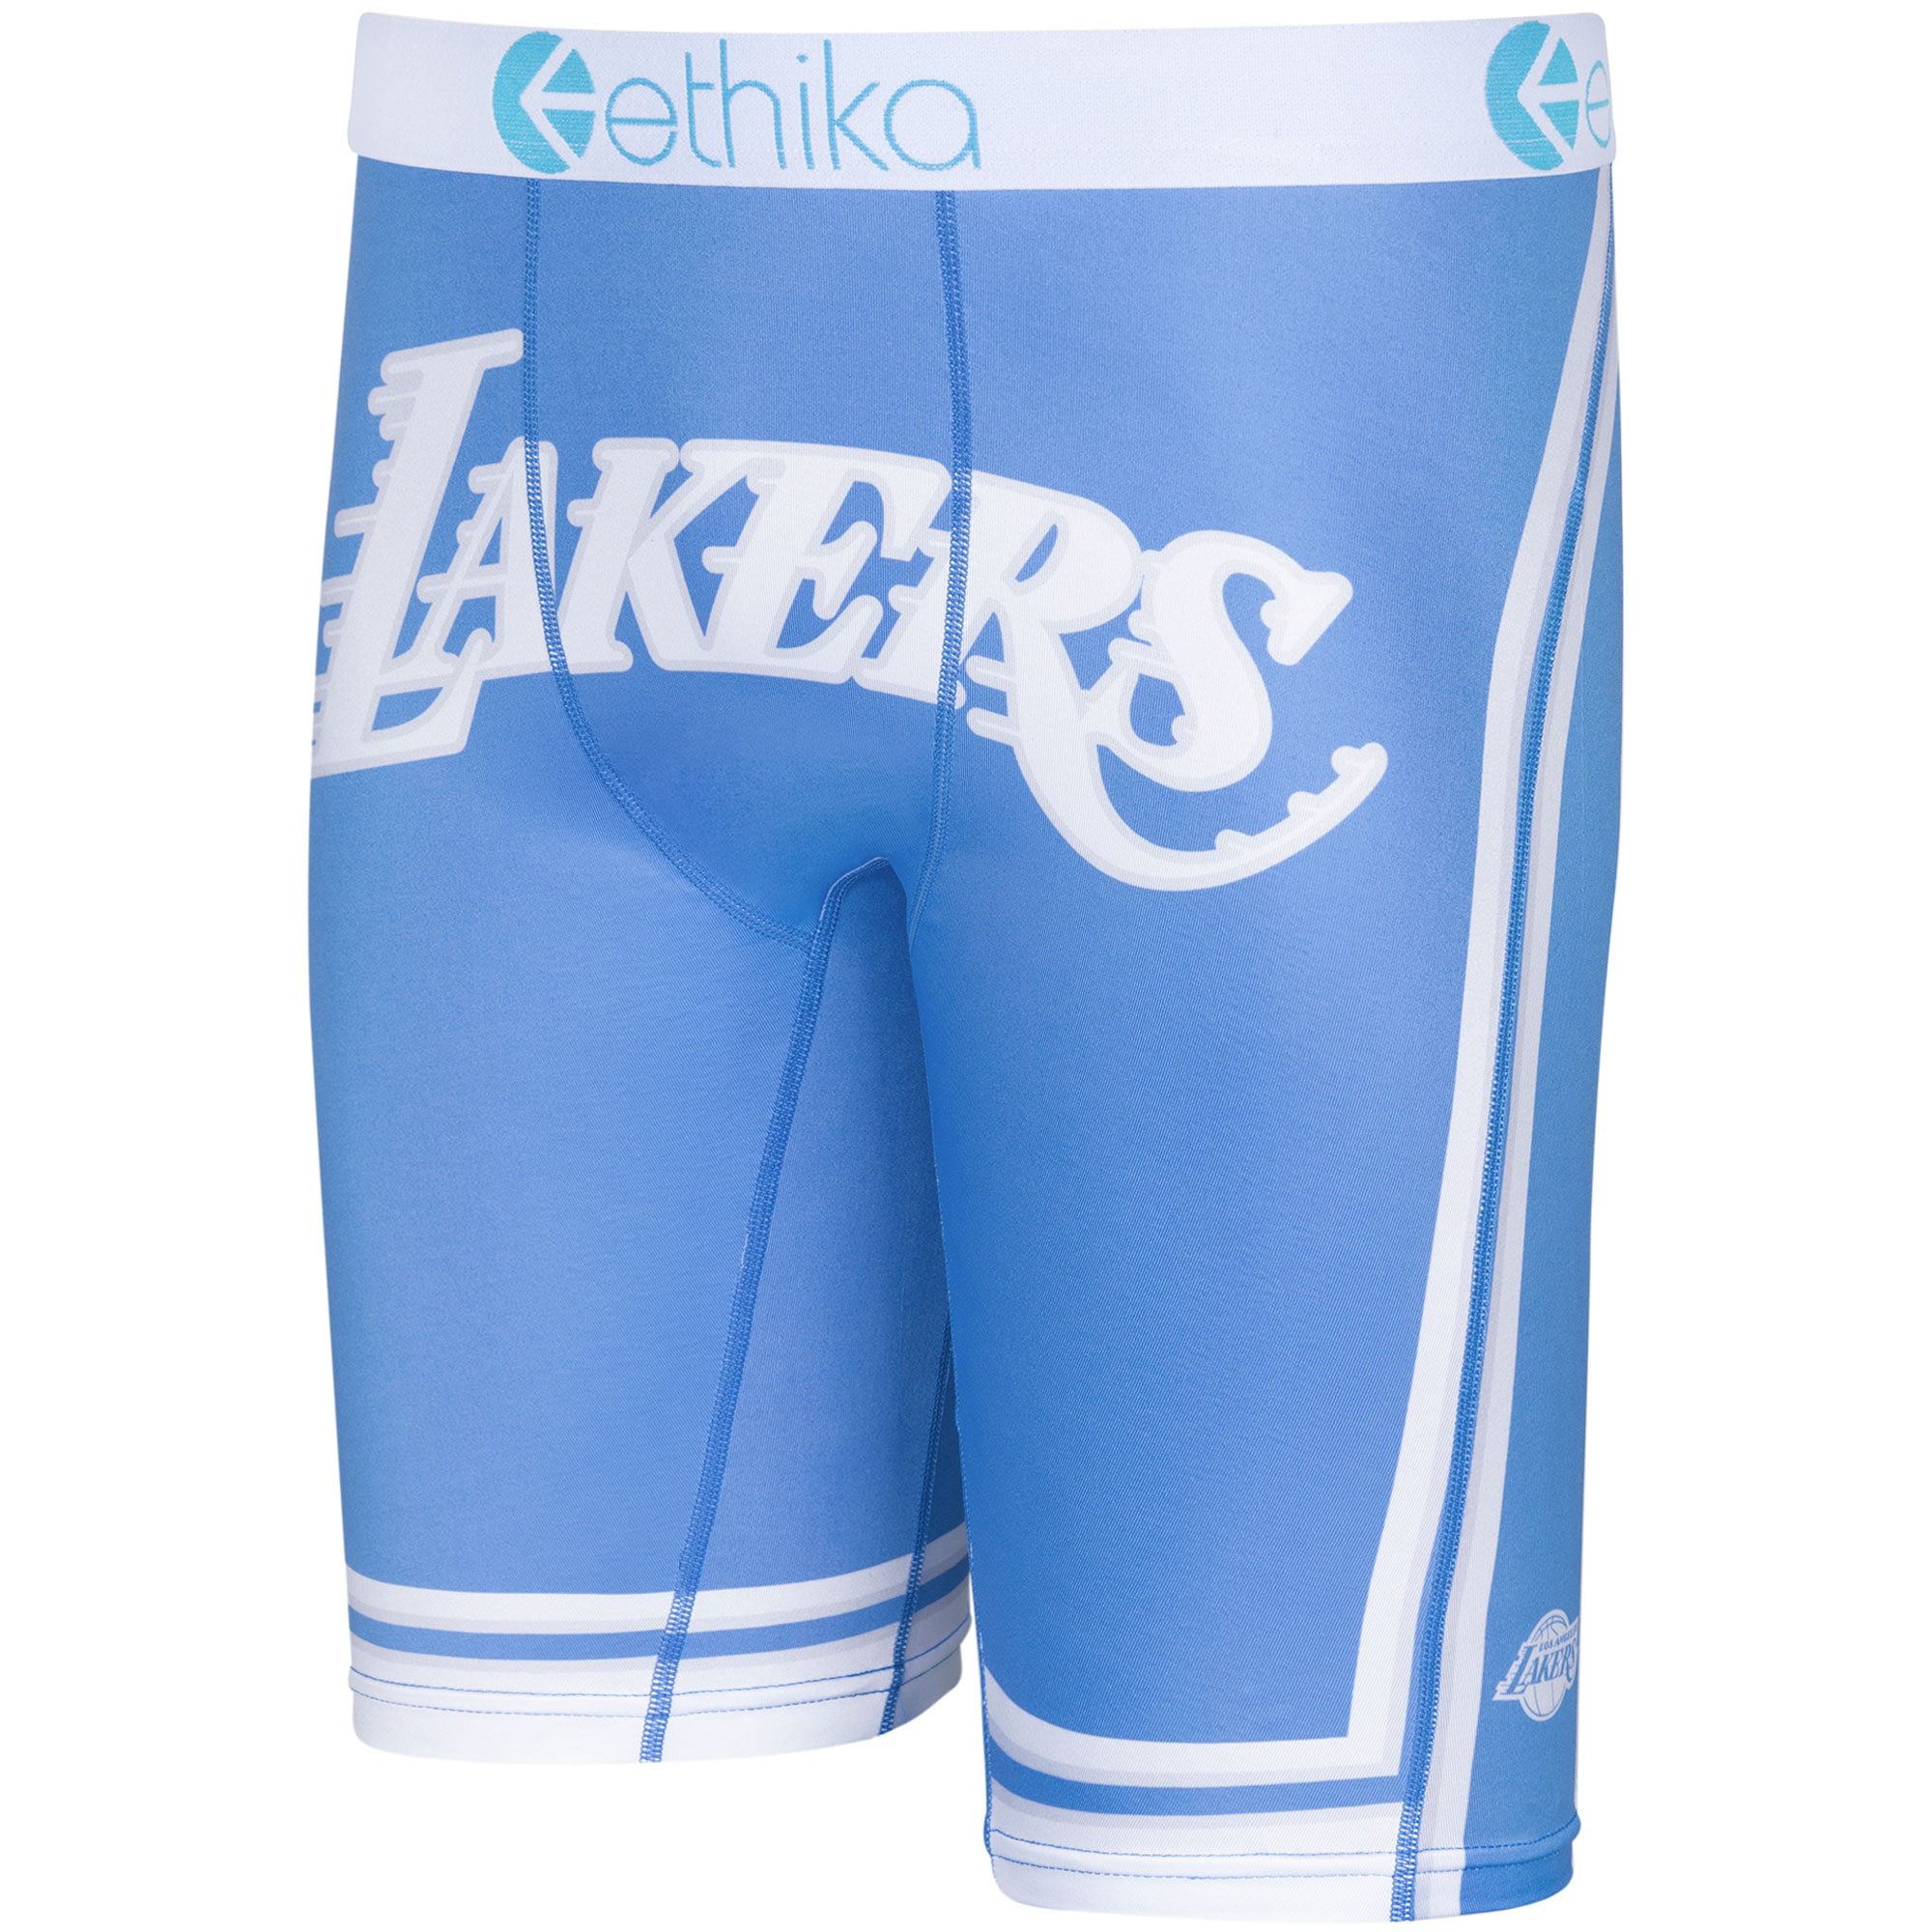 New Ethika Sky Blue City Man/Woman Underwear Sports Shorts Boxer Pants Size XL 